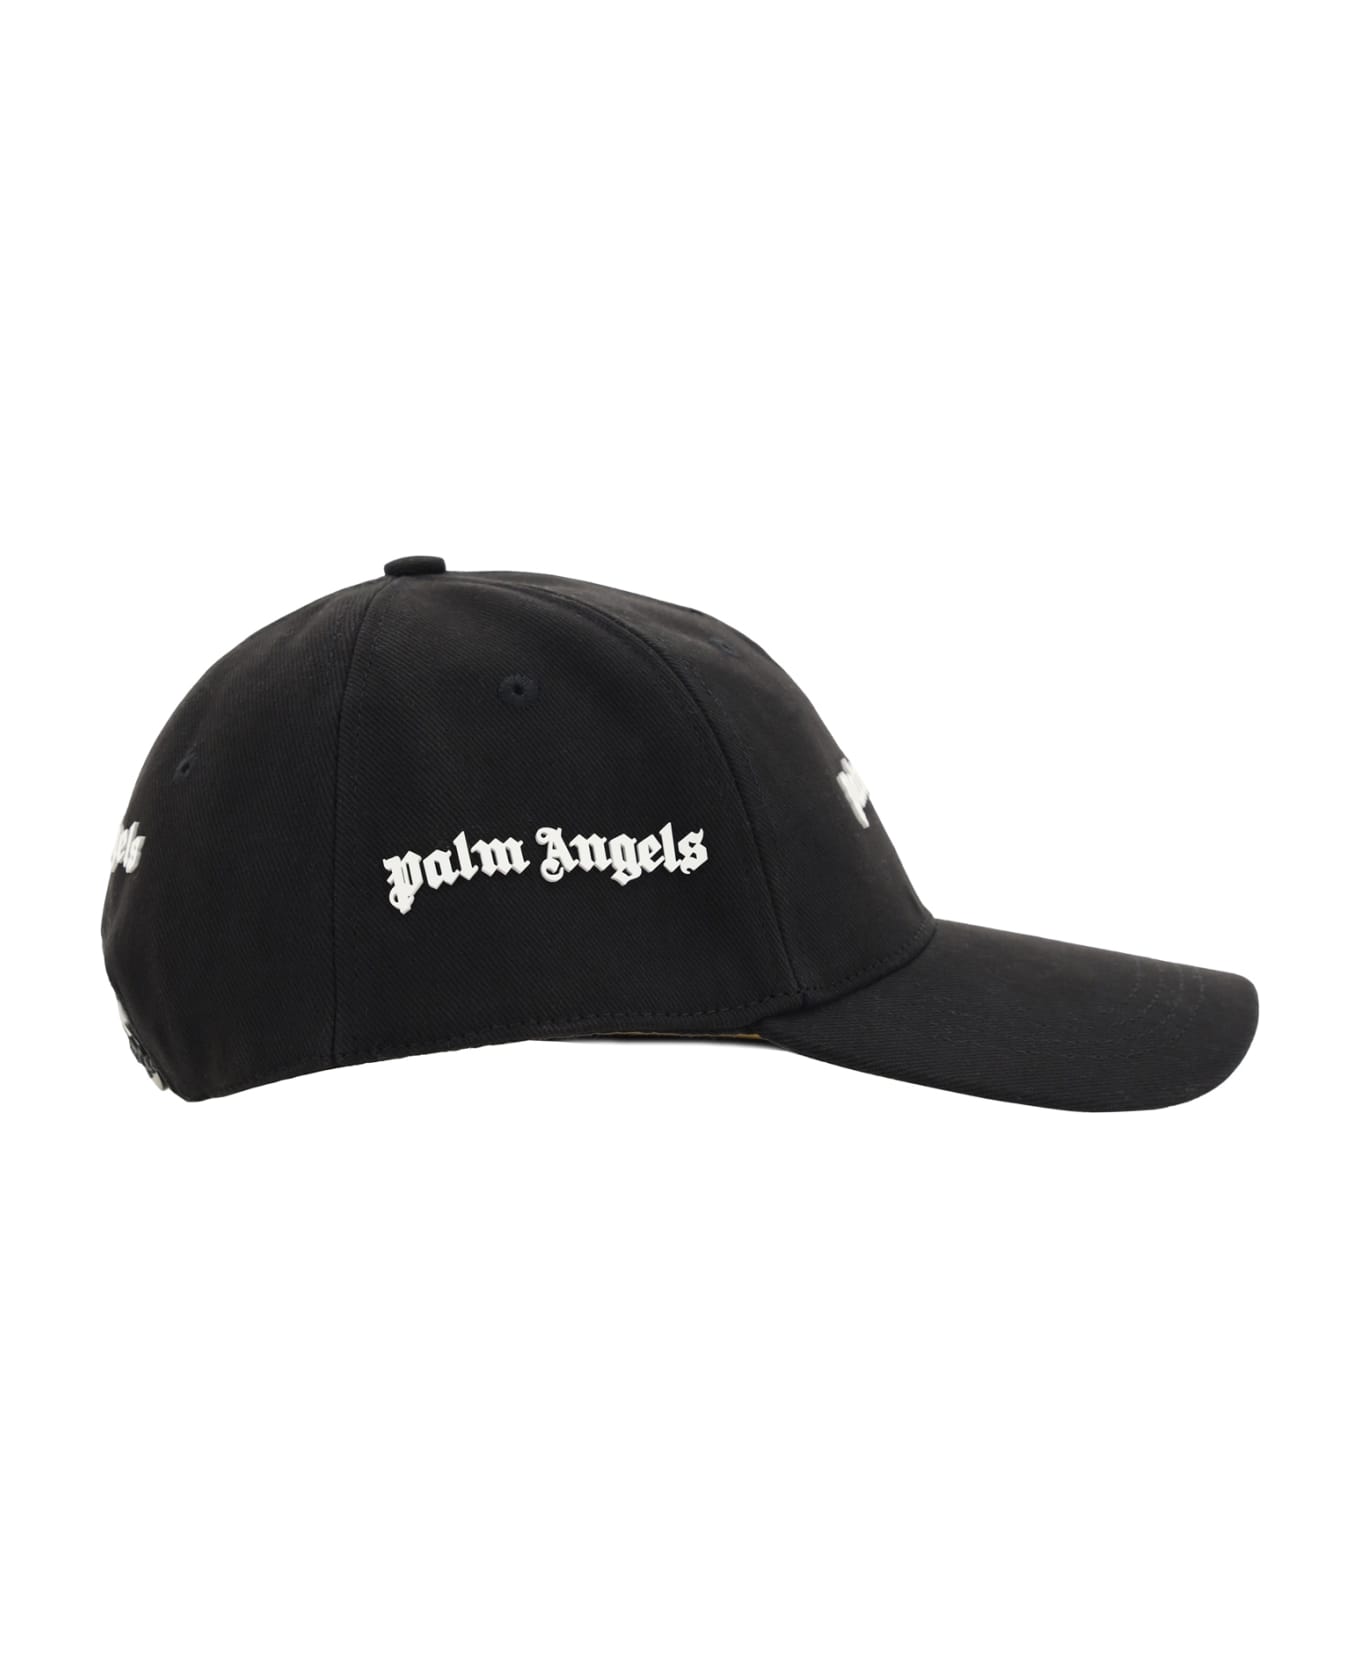 Palm Angels Baseball Cap - Black Whit